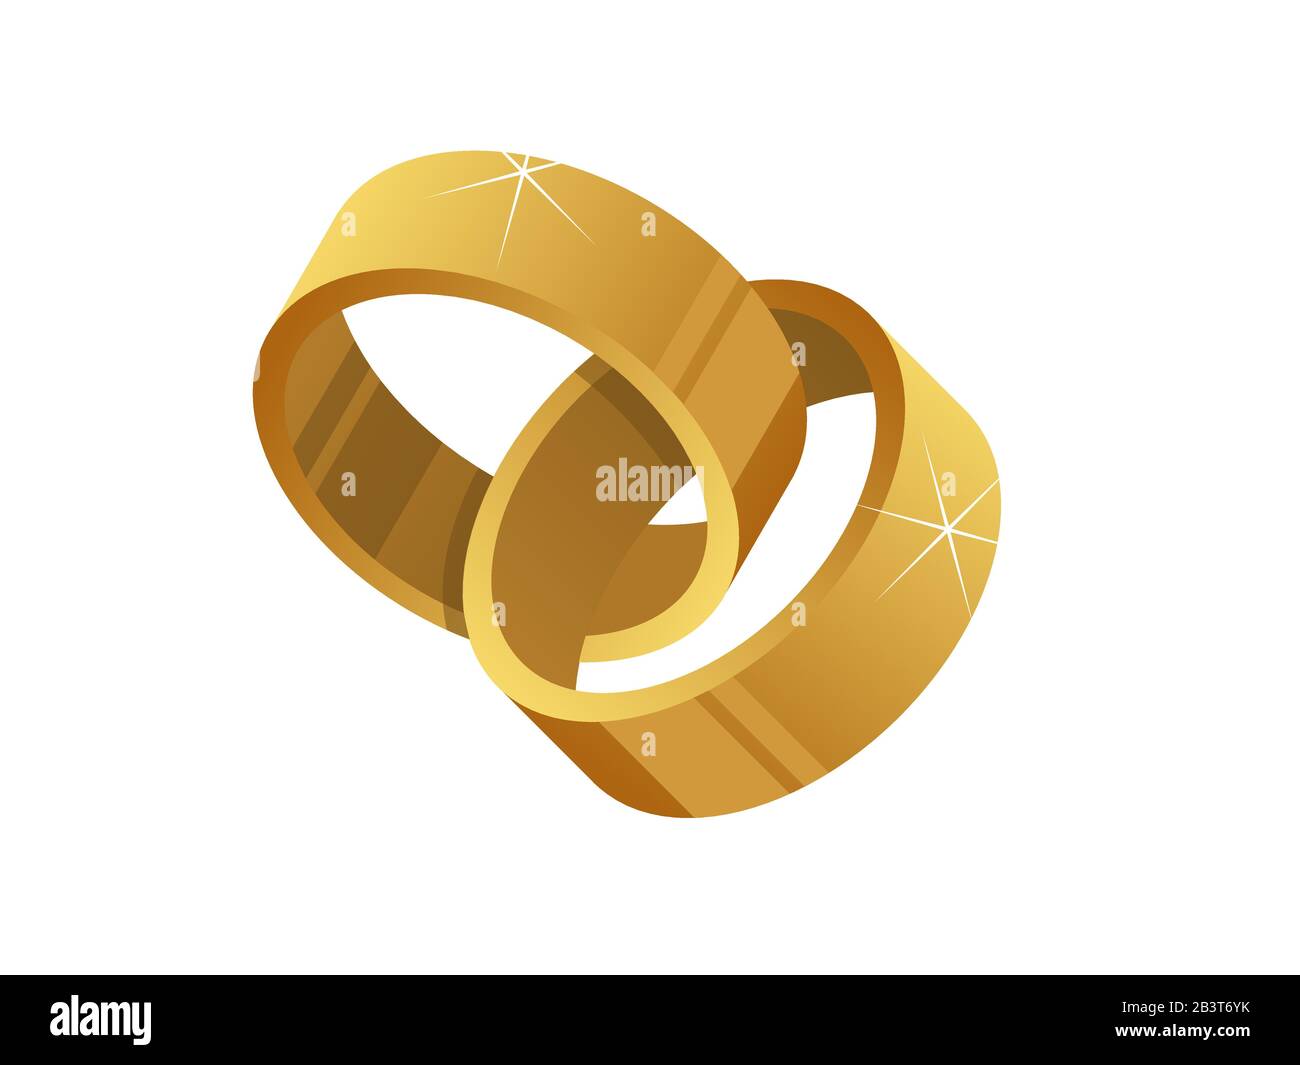 Interlocking Gold Wedding Rings Flat Design Stock Vector (Royalty Free)  1330631528 | Shutterstock